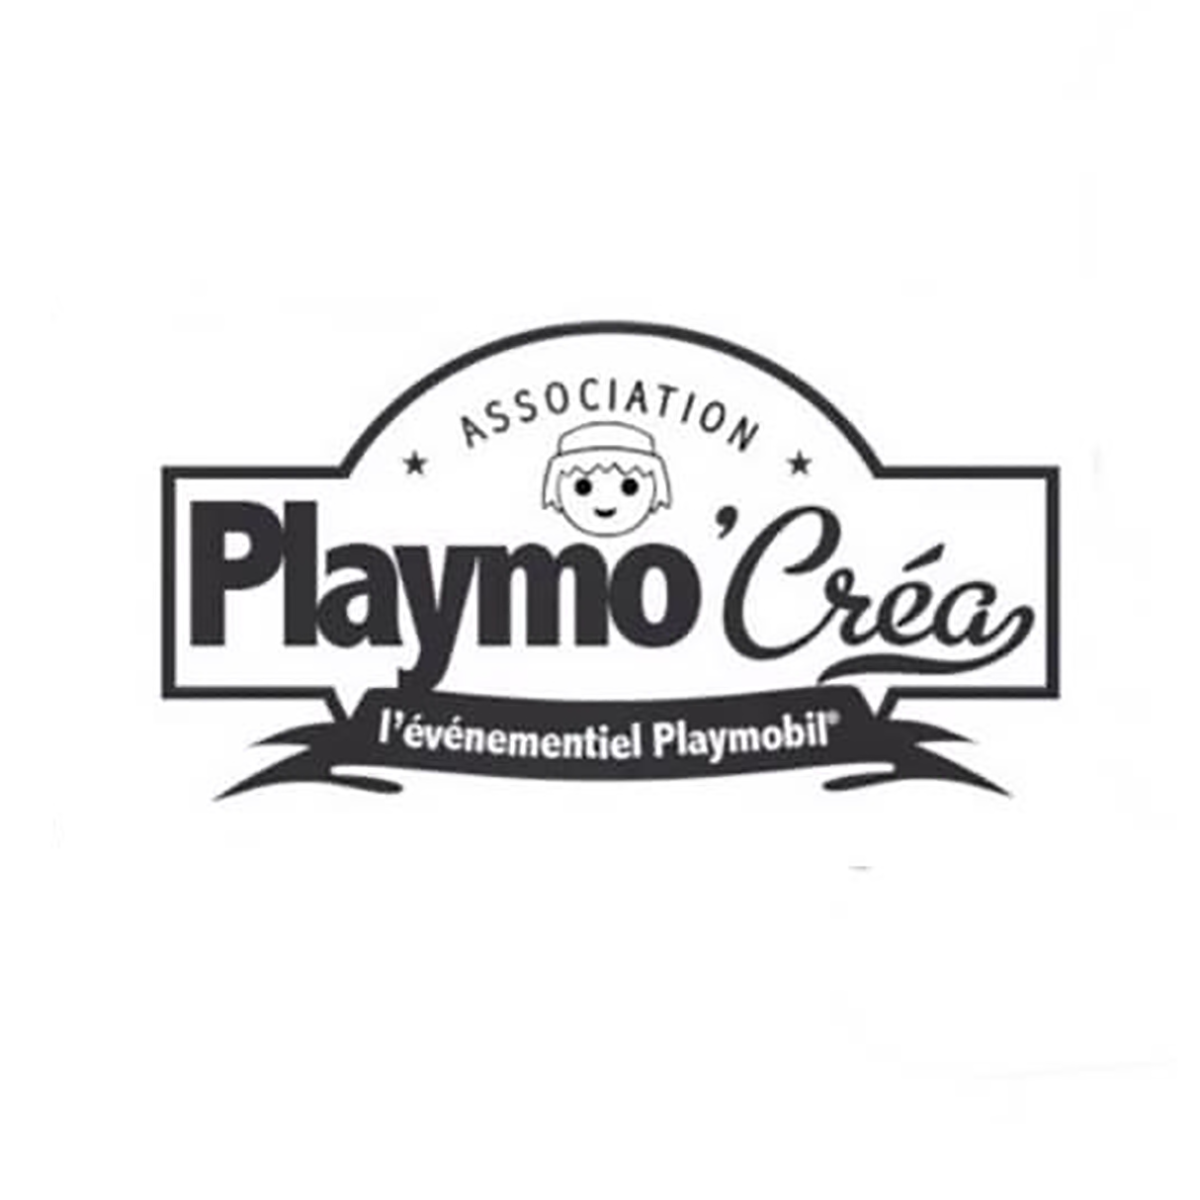 Association Playmobil Playmo Crea